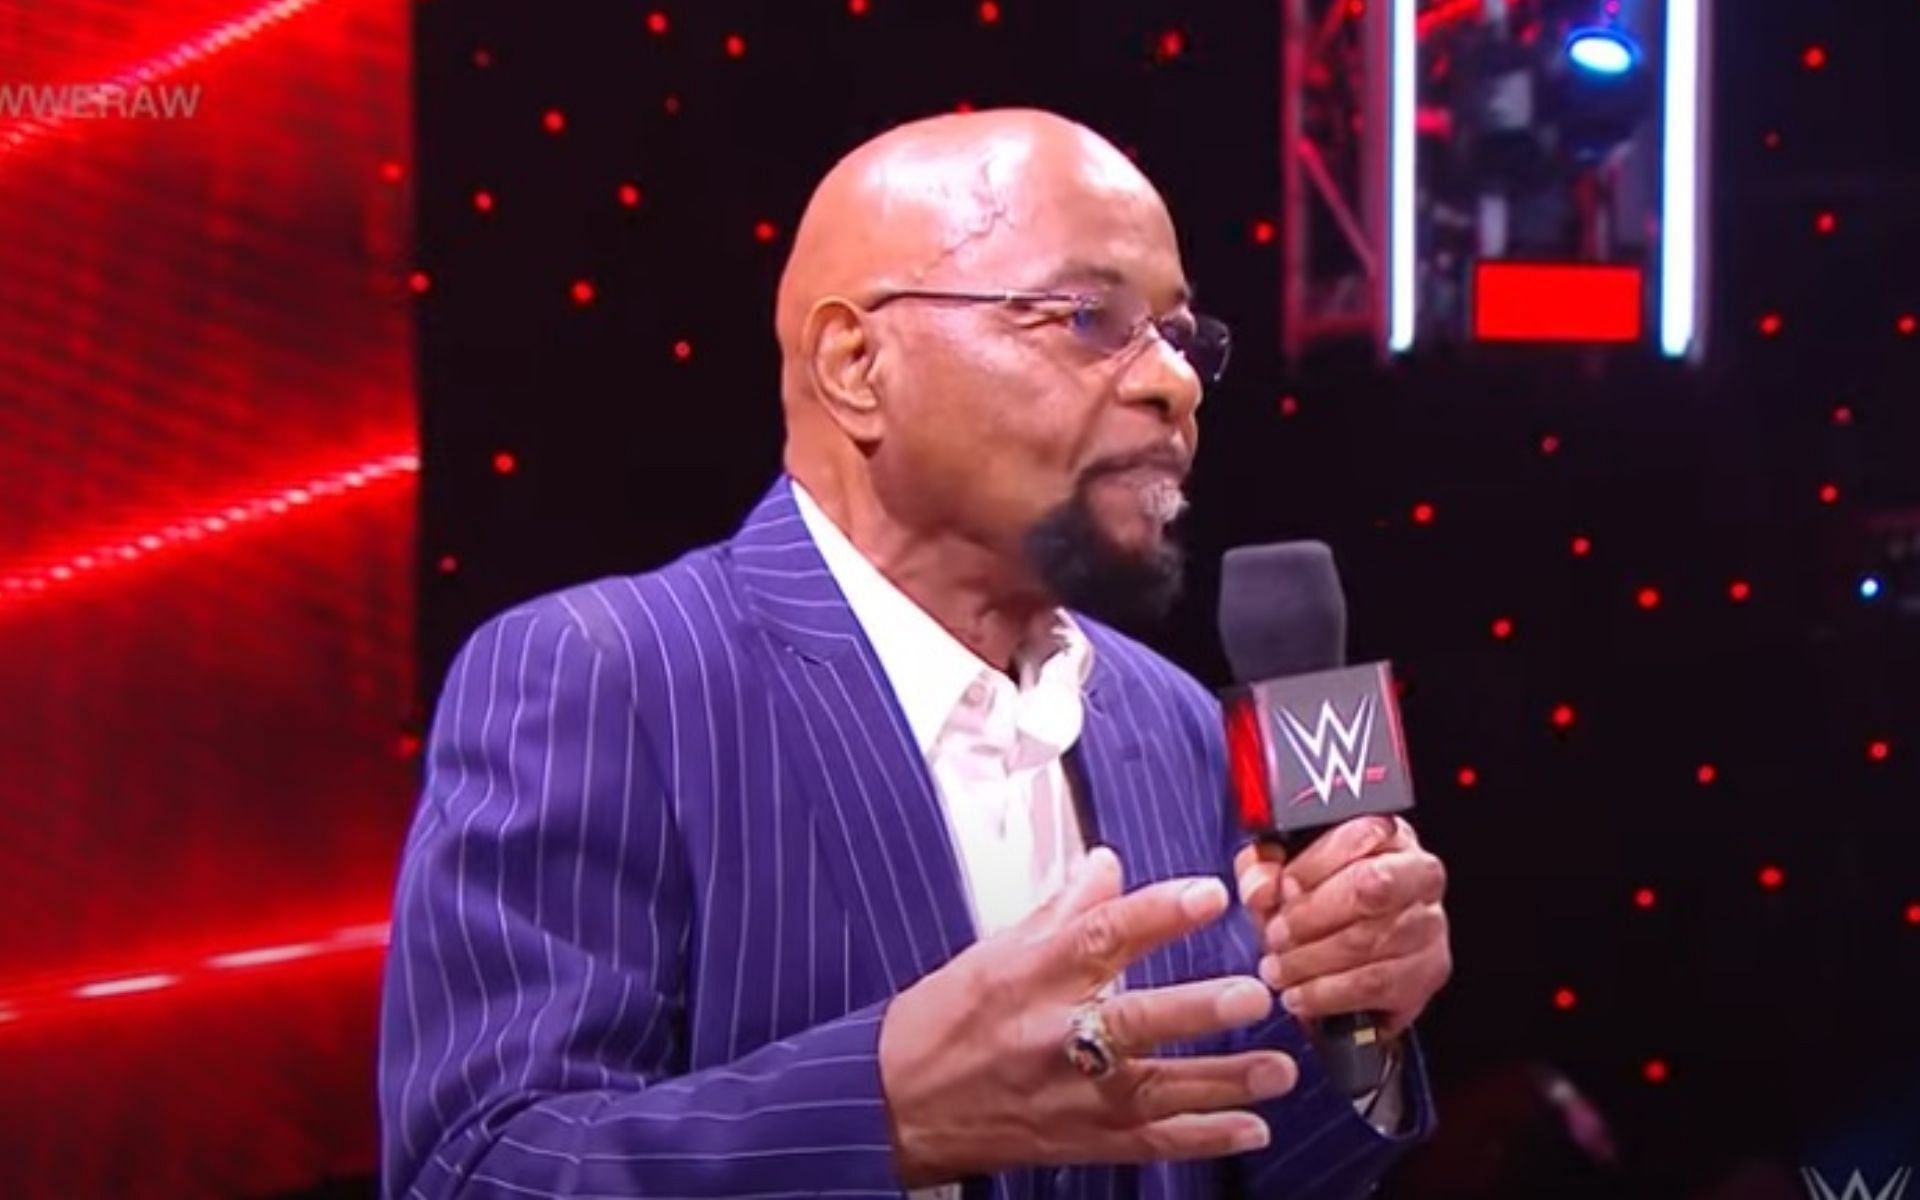 The former SmackDown GM is full of love for the wrestling legend